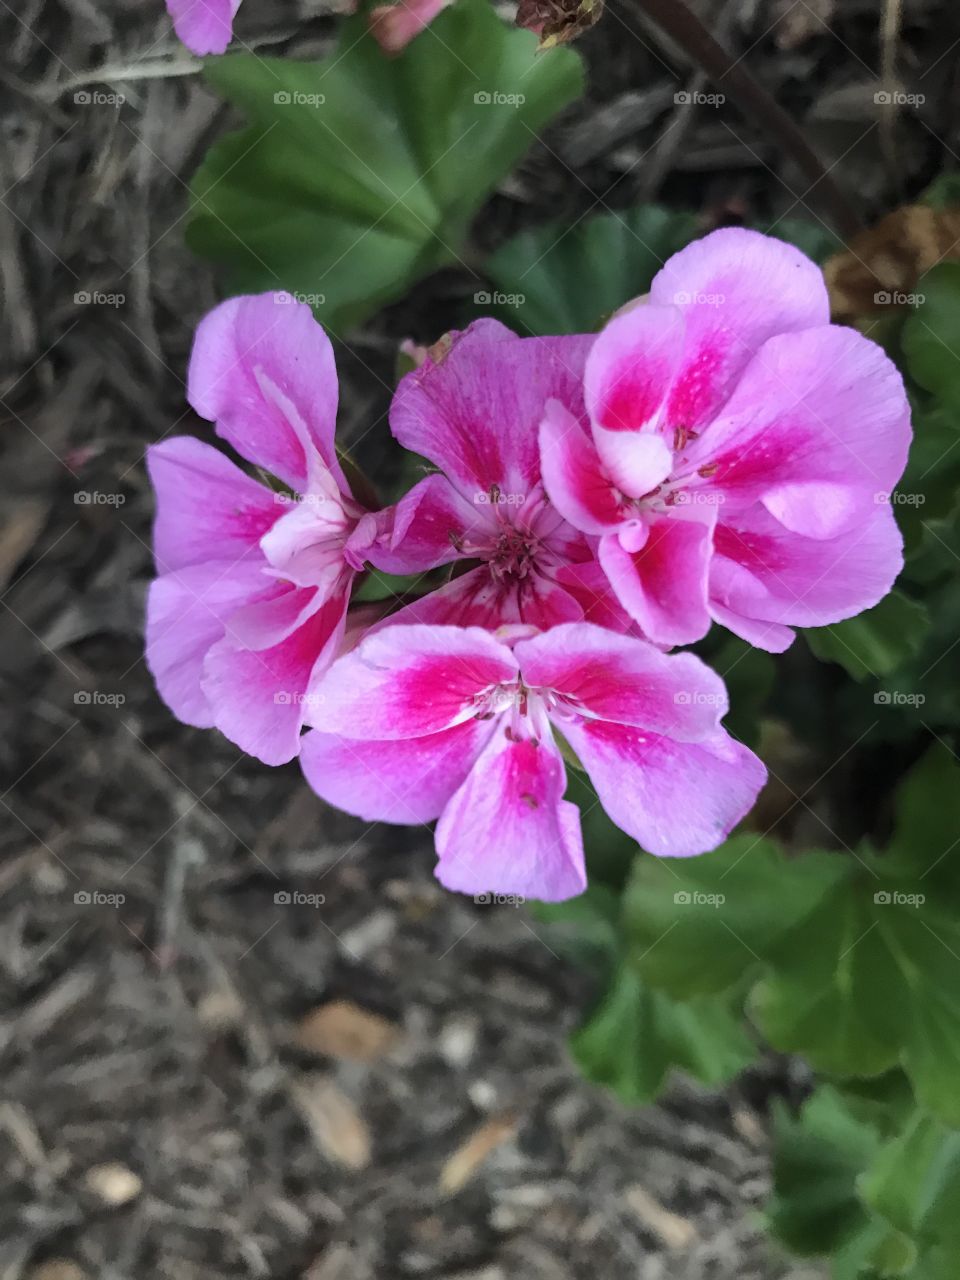 Vibrant pink flowers